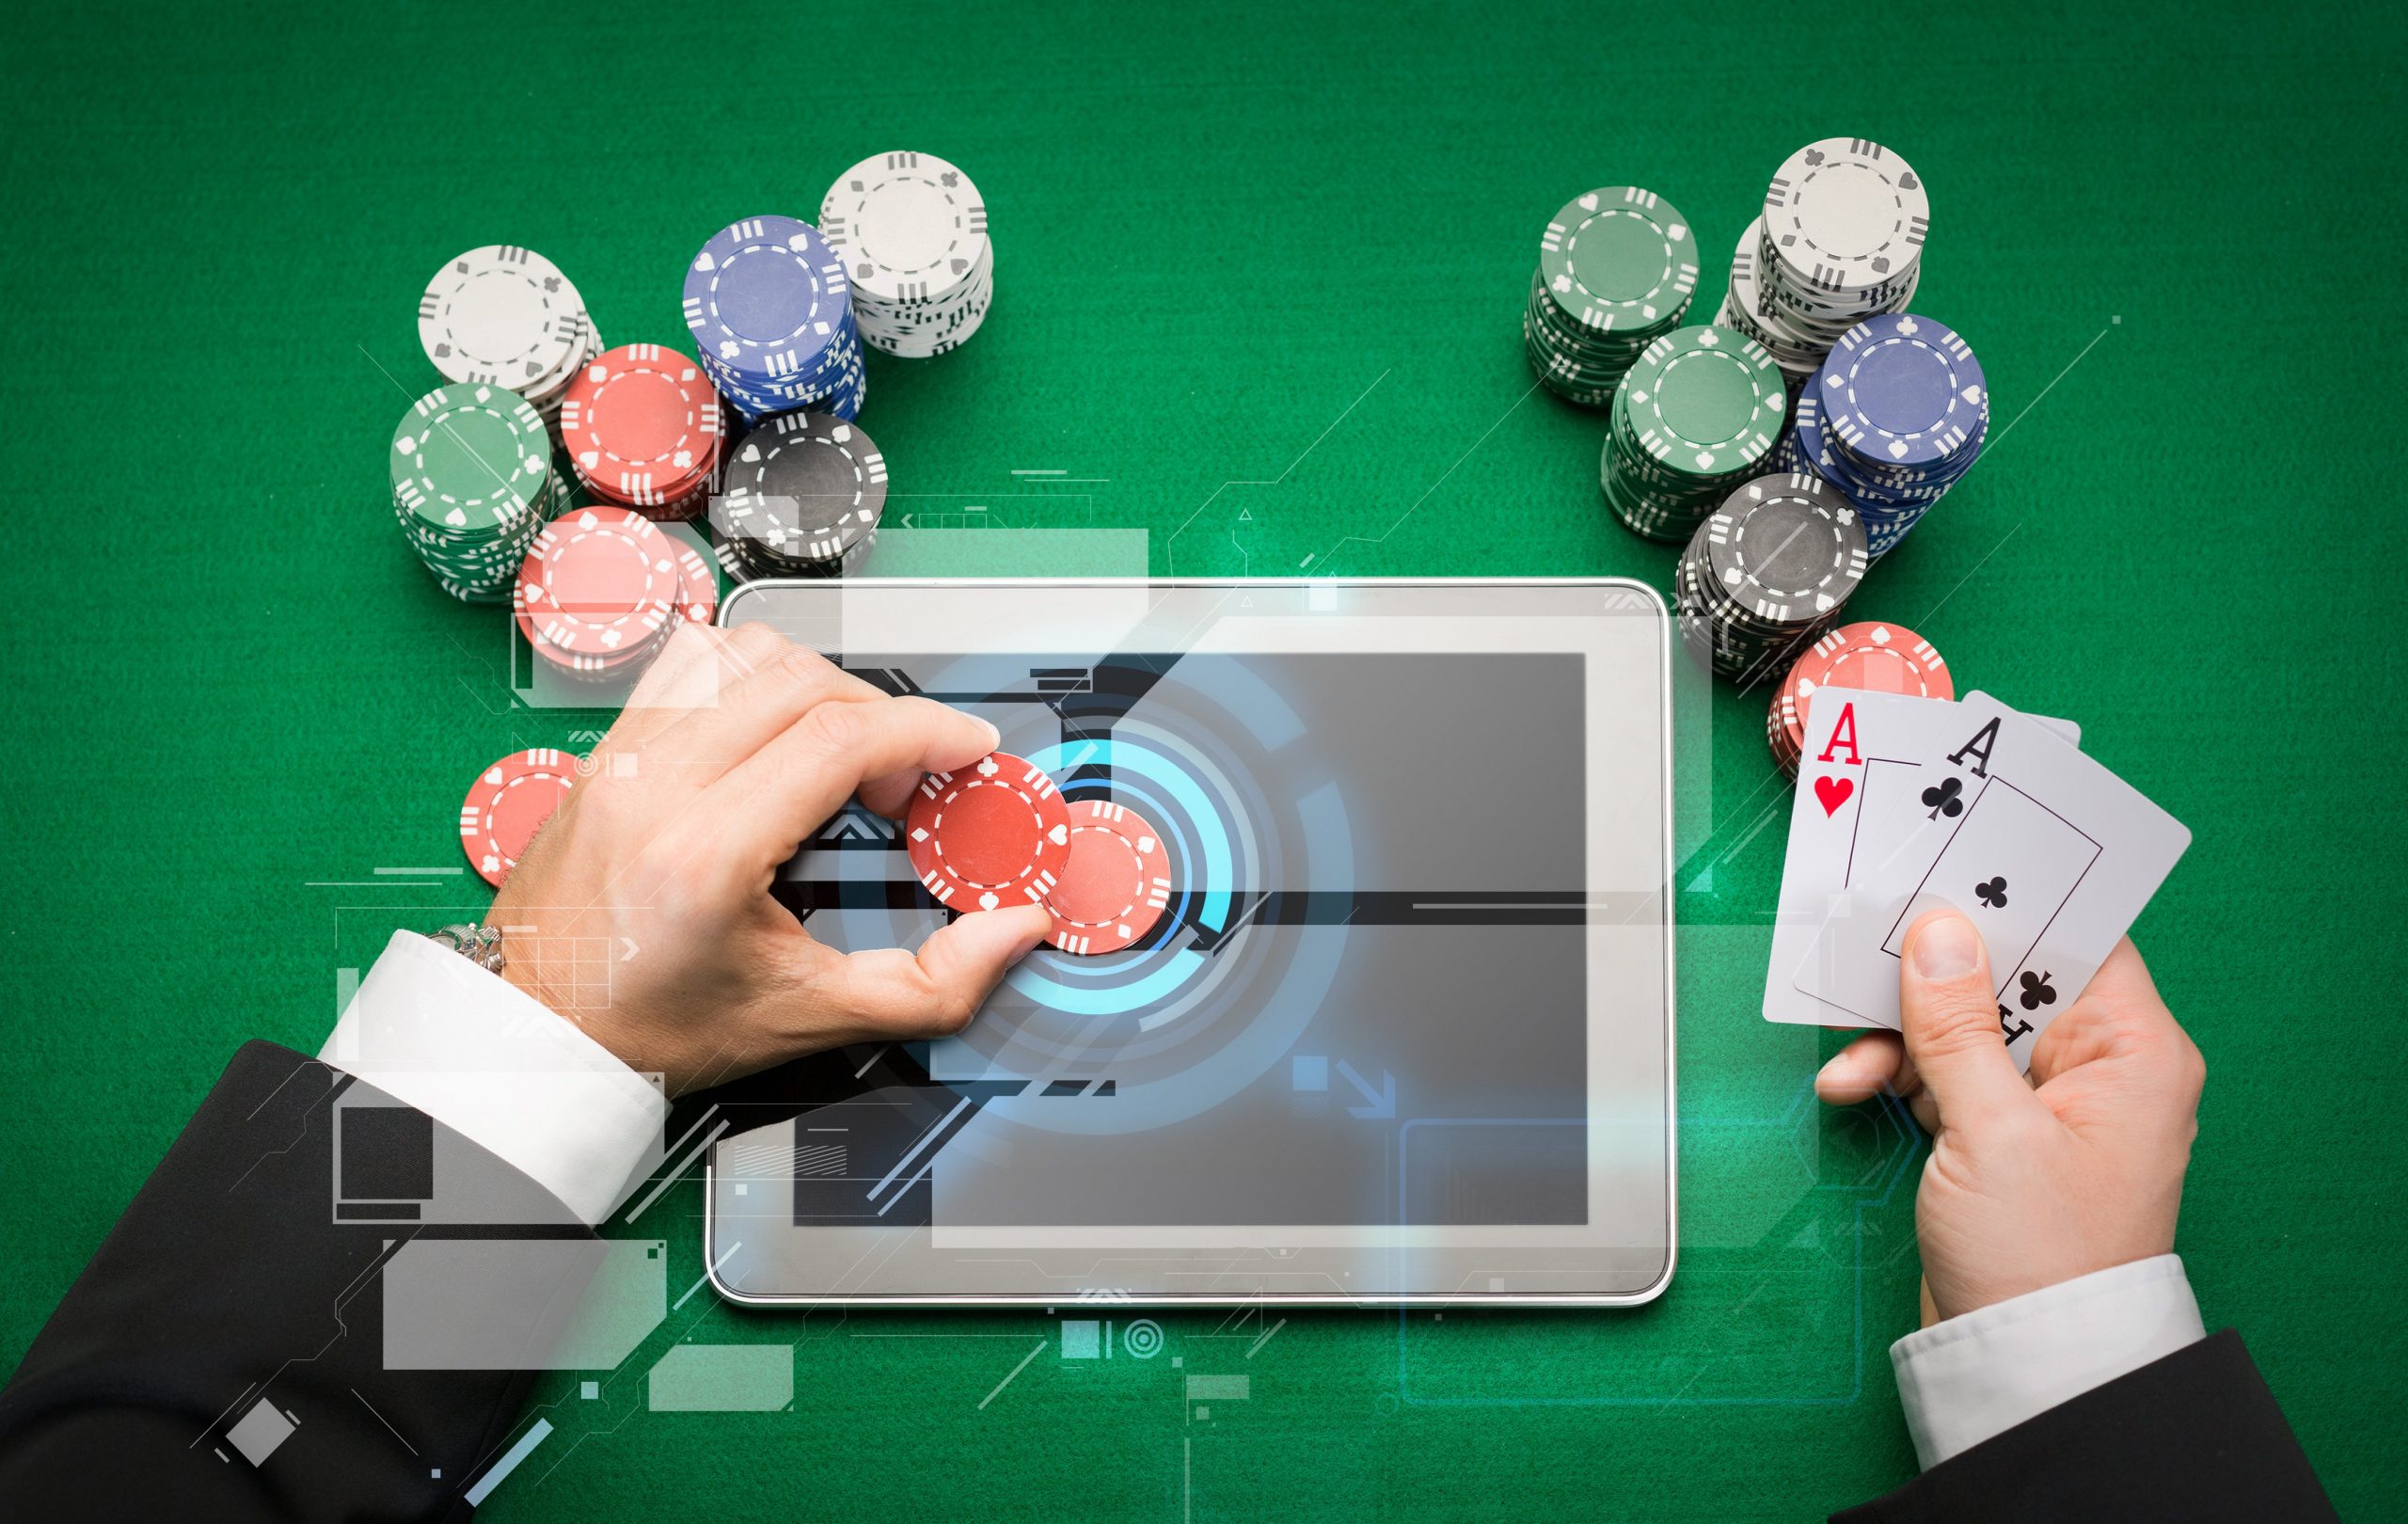 best online gambling casinos in canada best